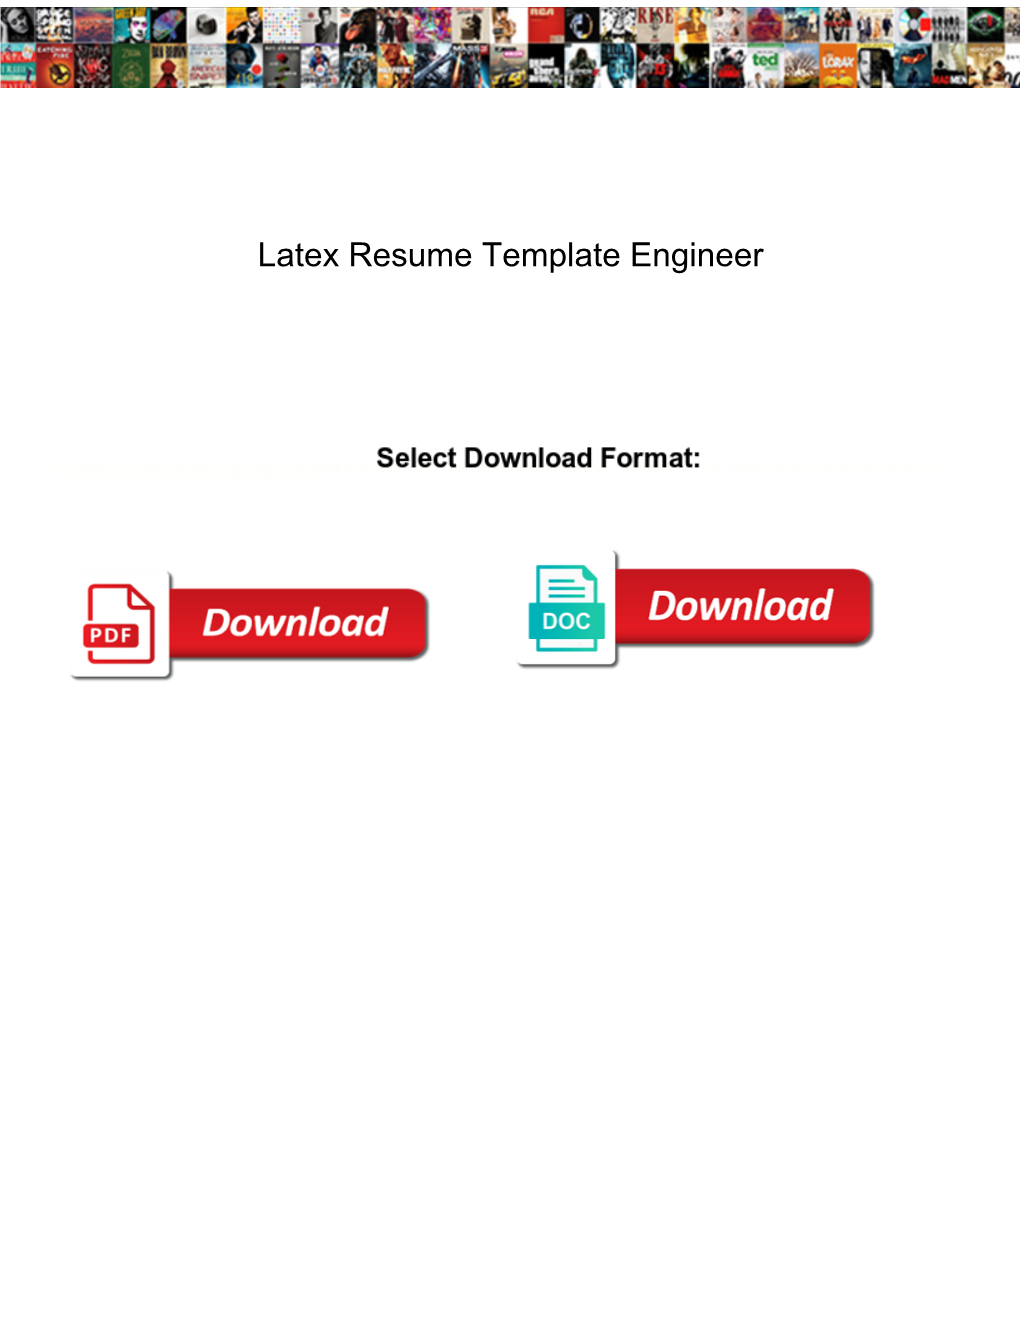 Latex Resume Template Engineer